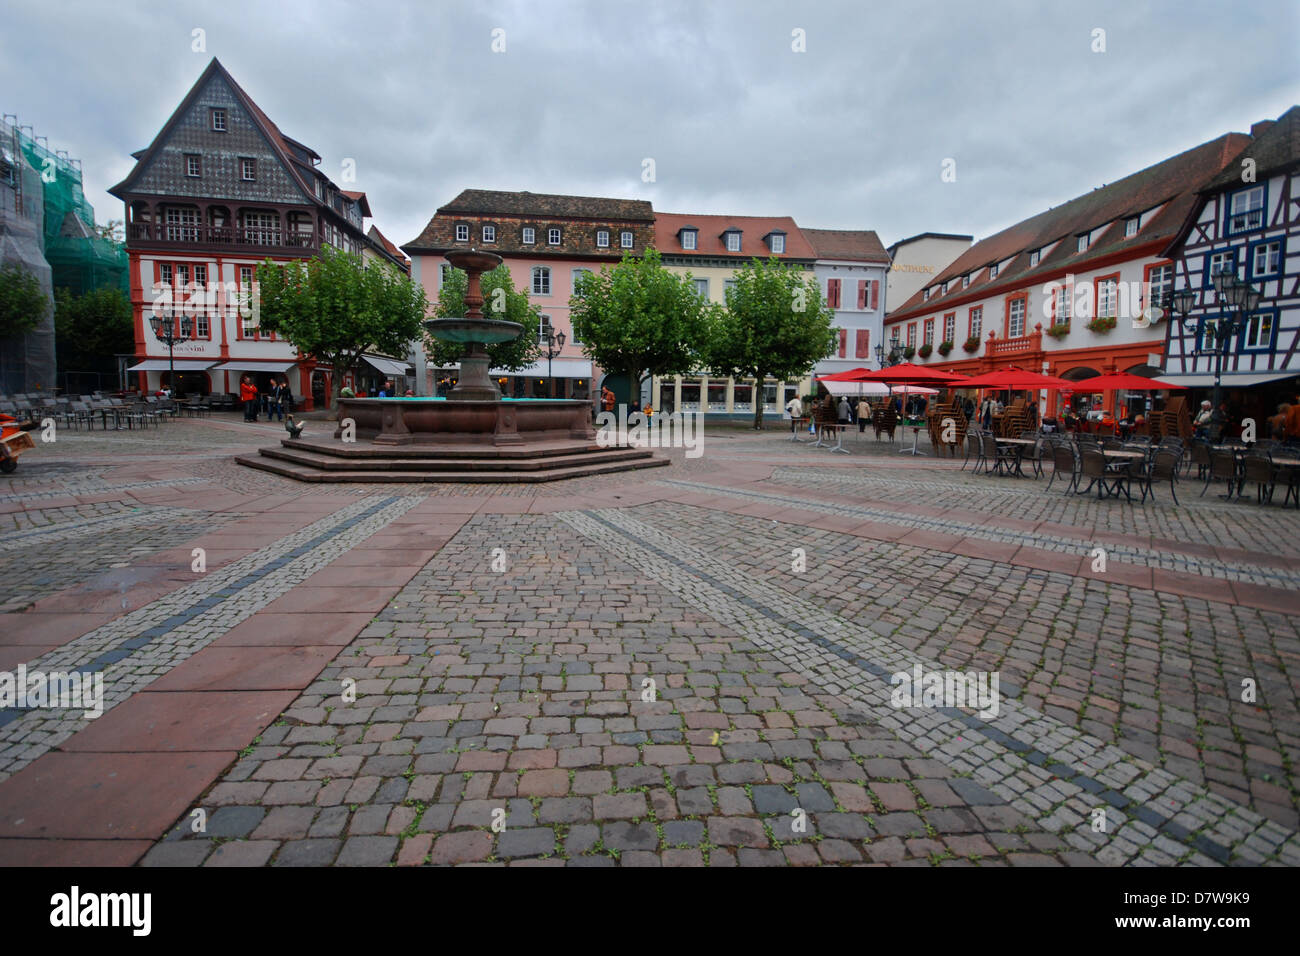 Market square in Neustadt, in Rhineland-Palatinate, Germany Stock Photo